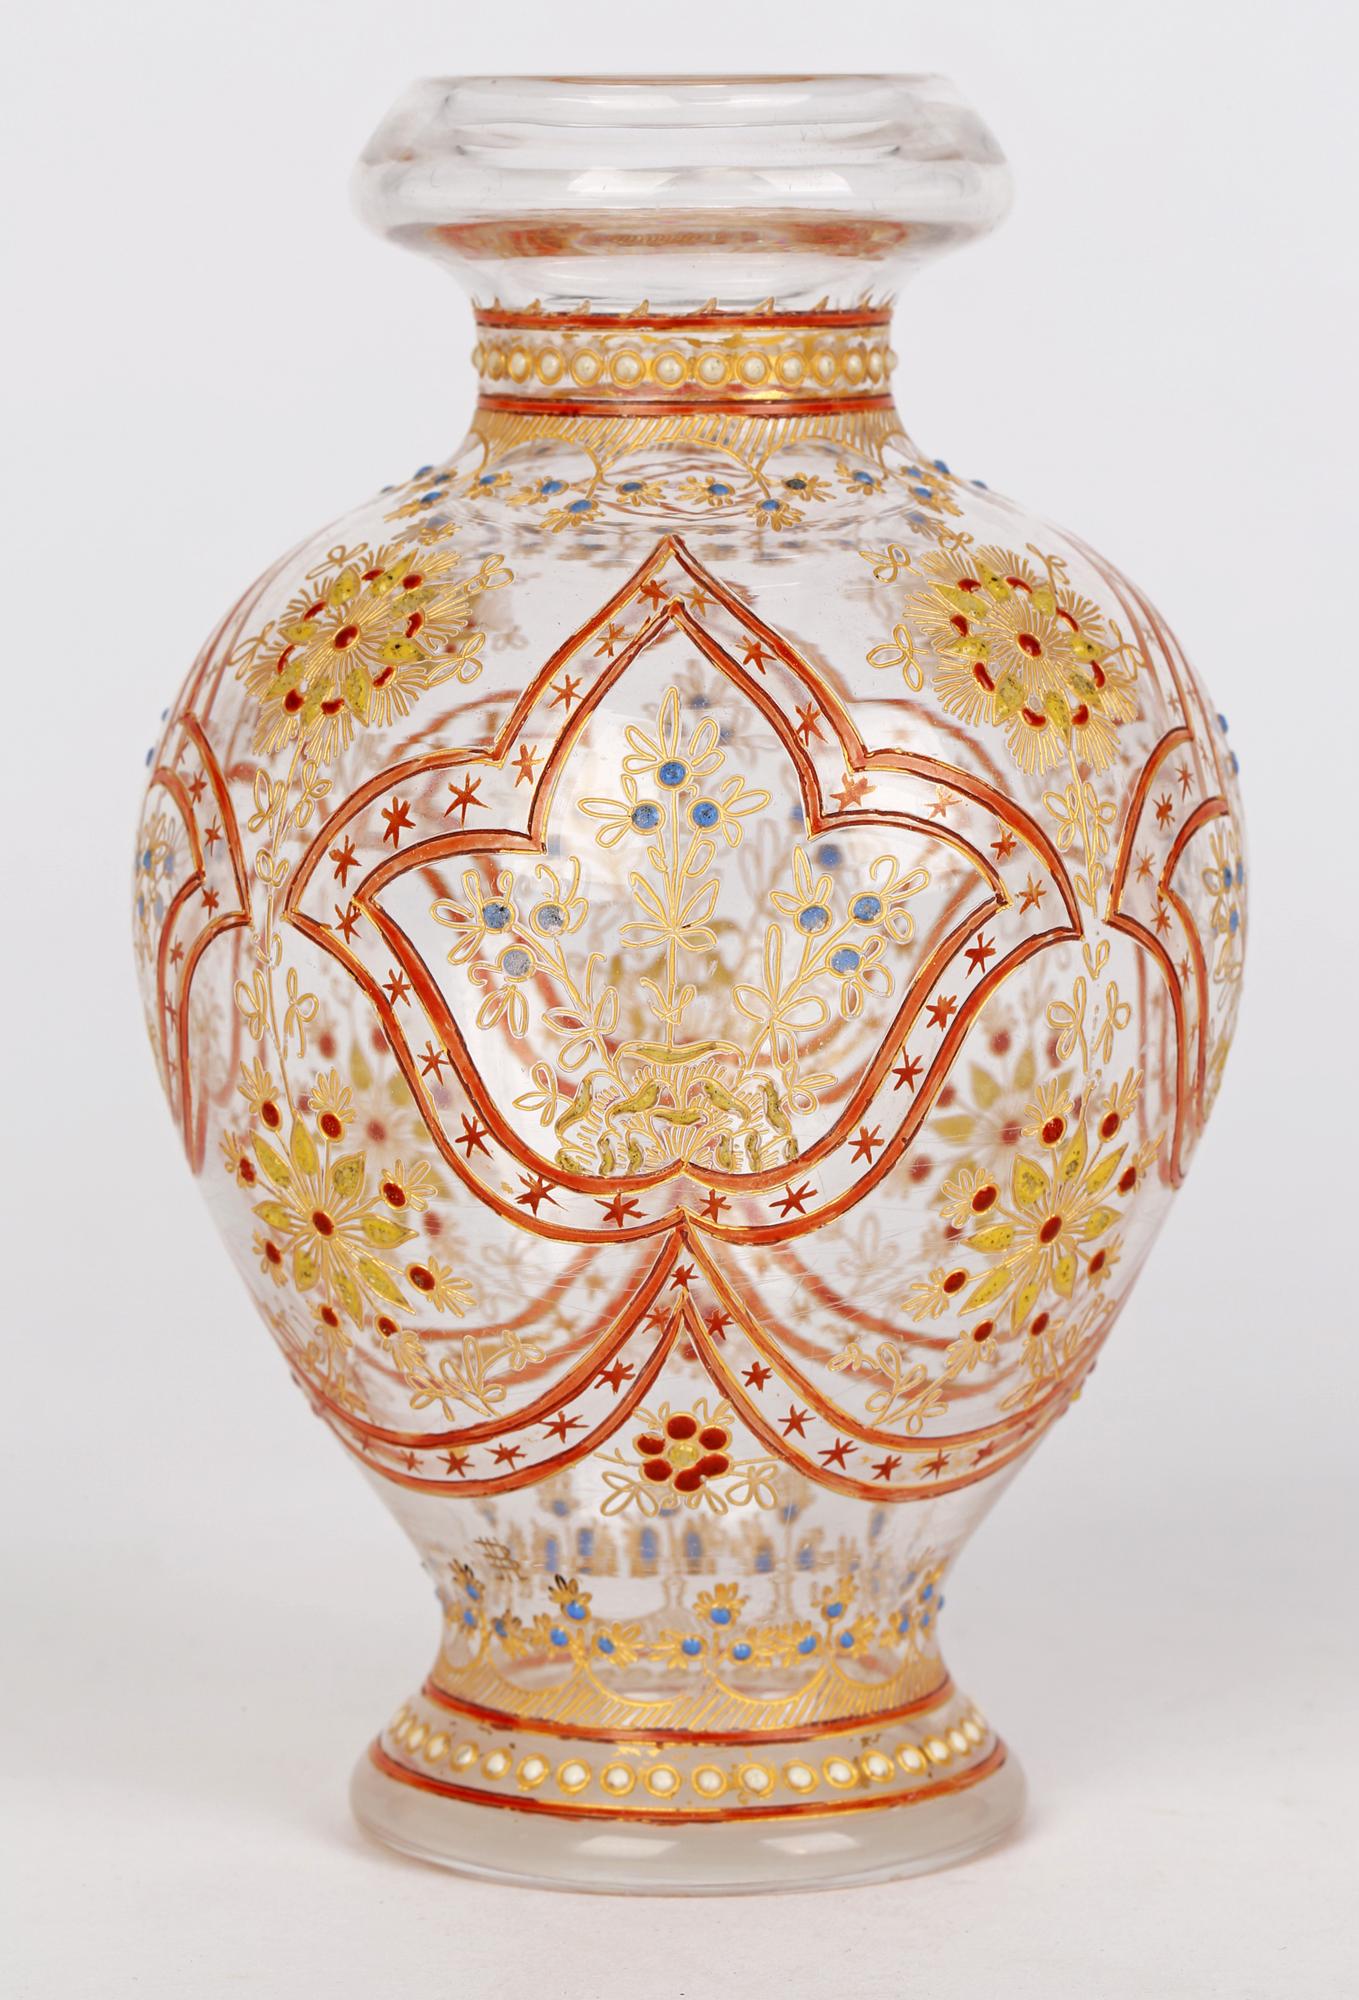 J & L Lobmeyr Viennese Enamelled Persian-Style Glass Vase In Good Condition For Sale In Bishop's Stortford, Hertfordshire